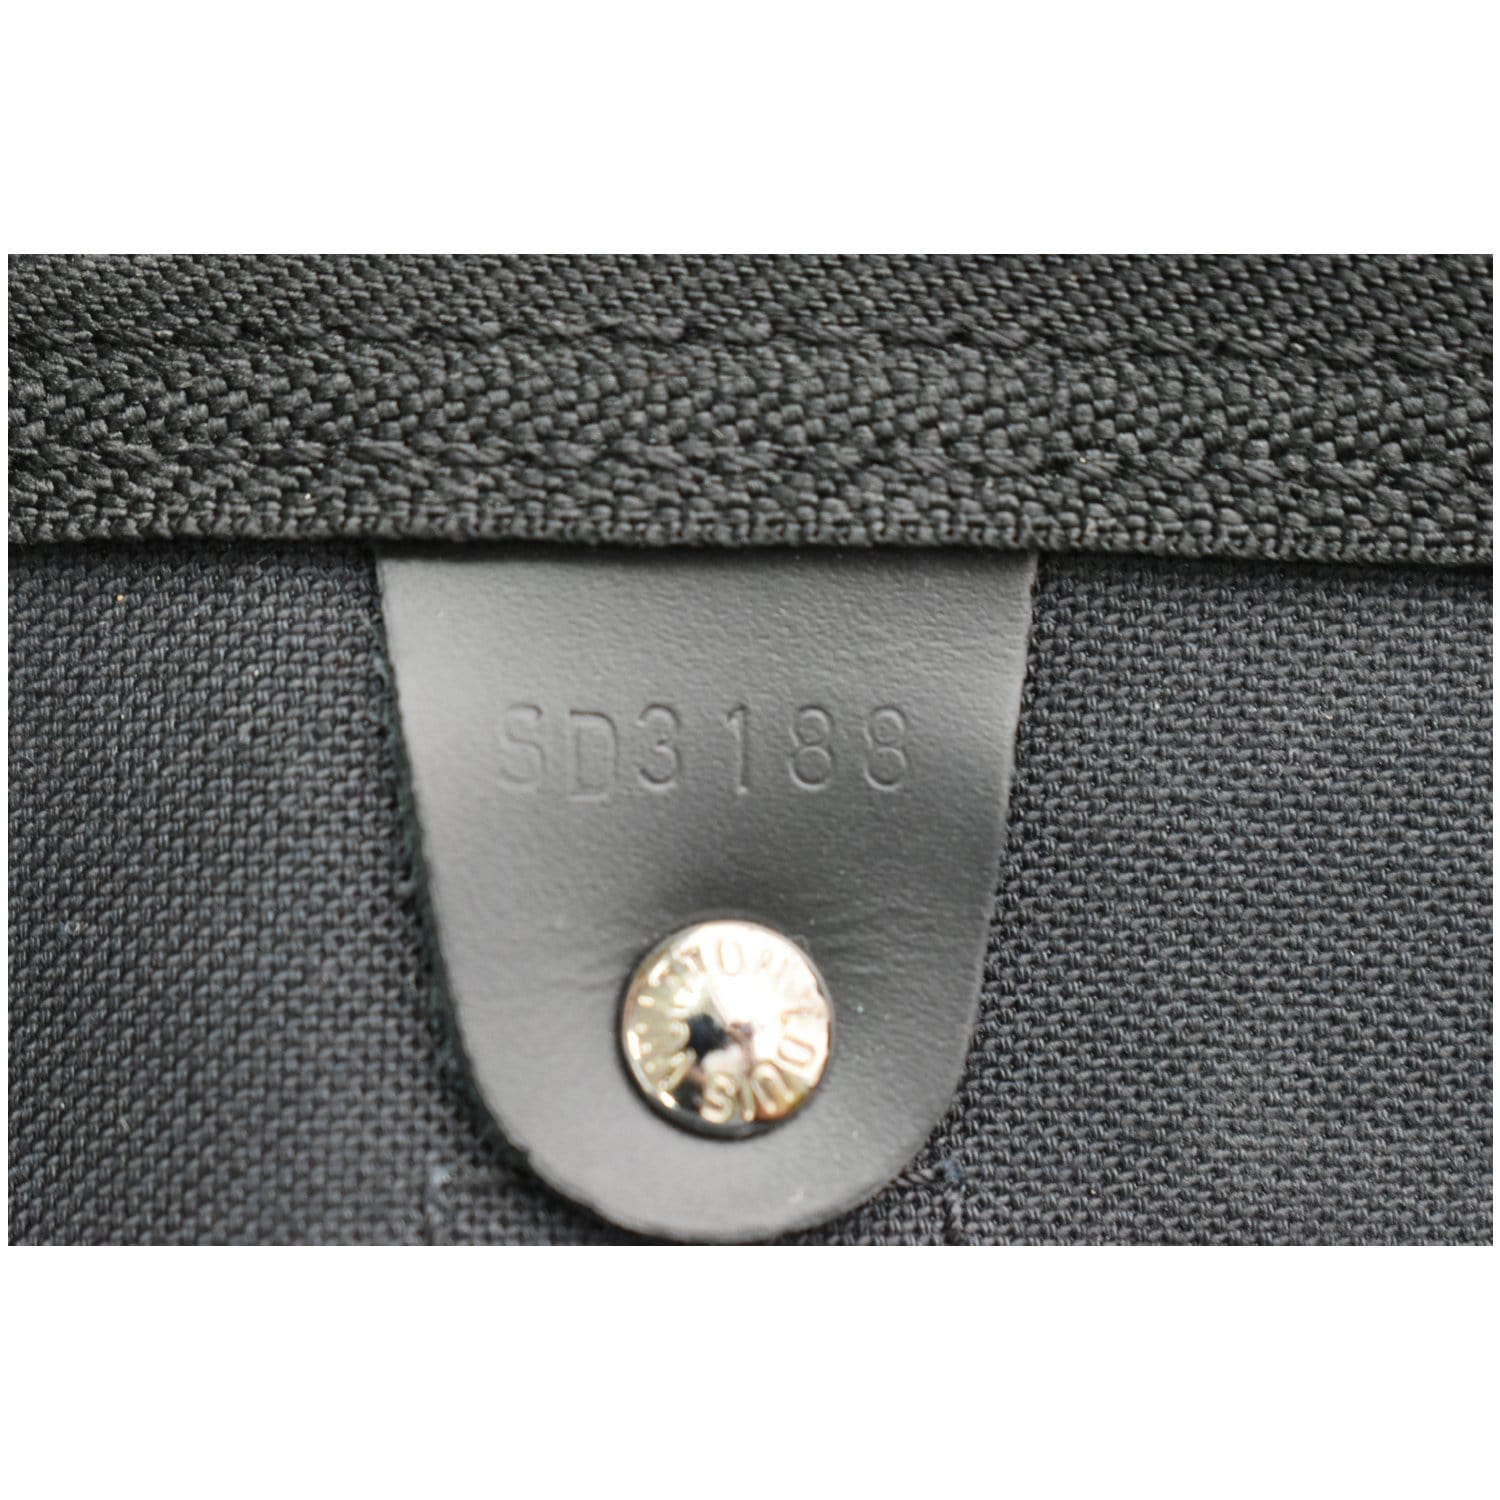 Louis Vuitton Artsy Bag Date Code - Lake Diary